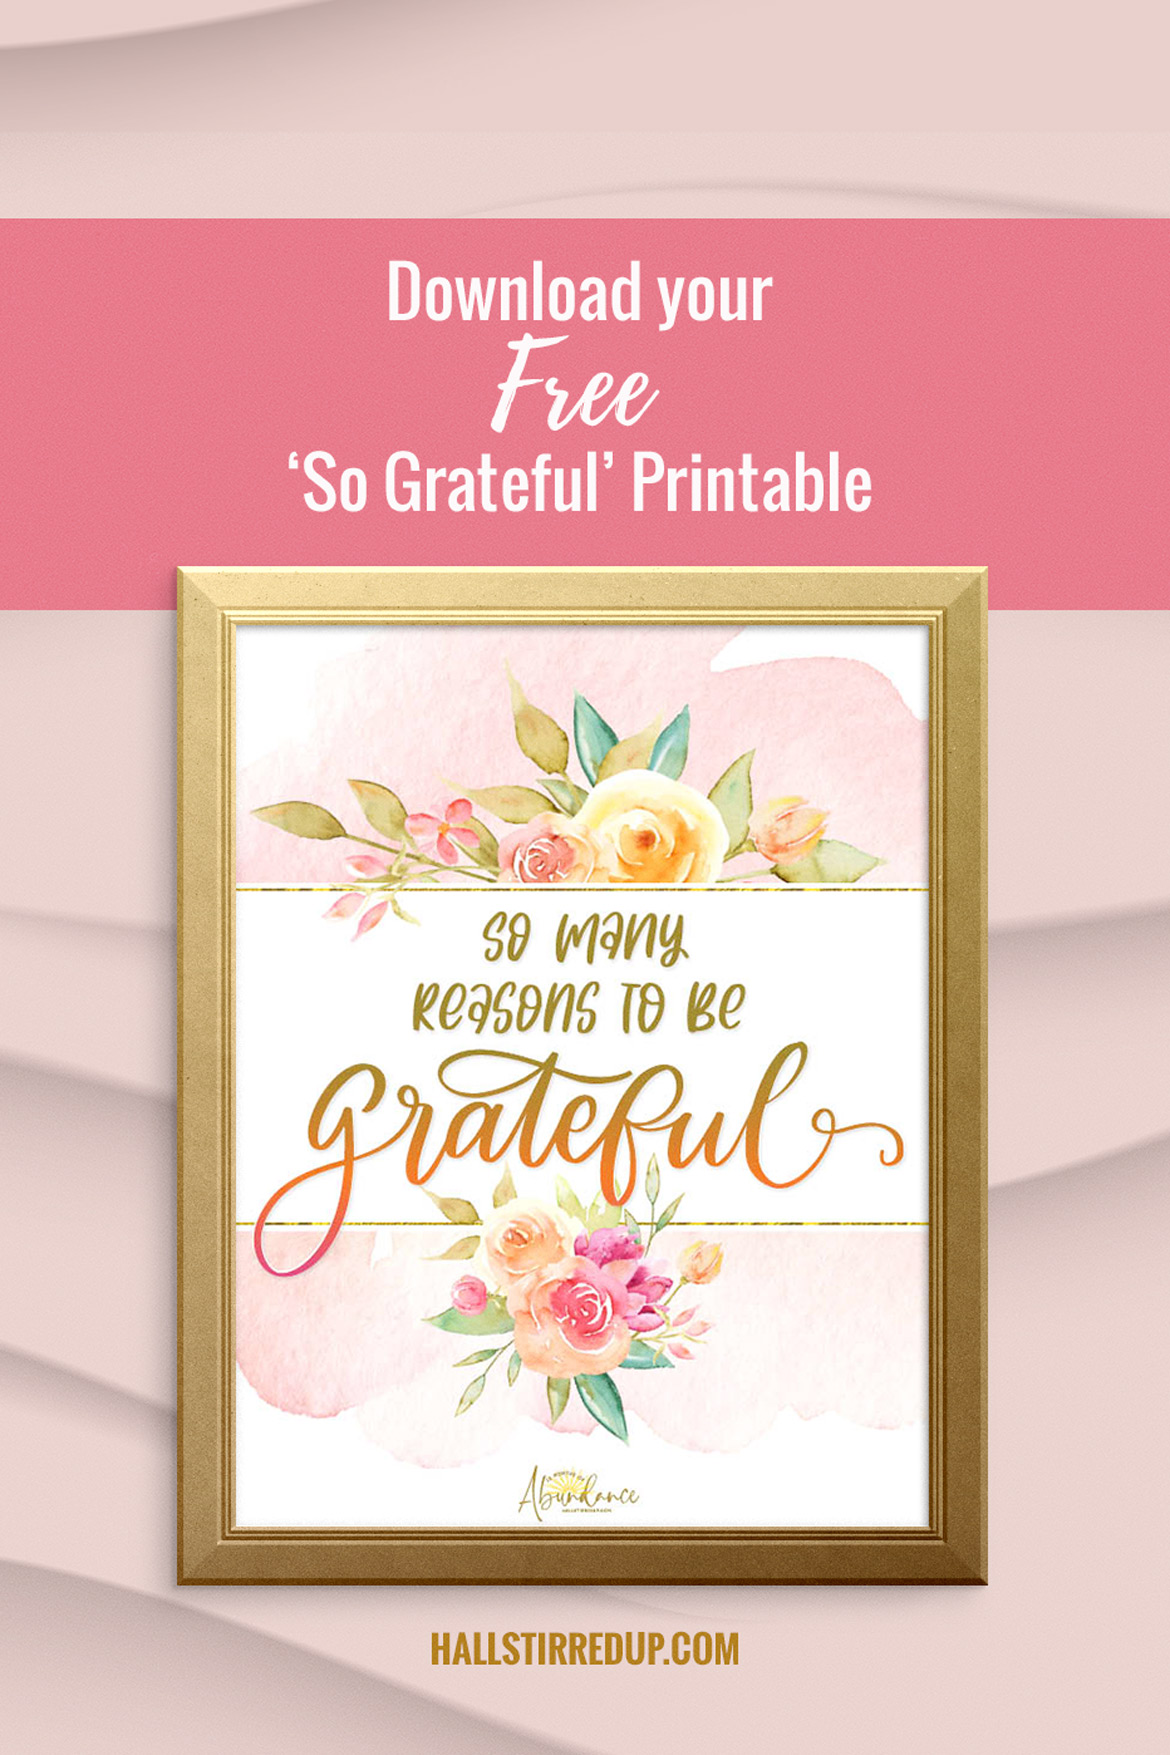 4 ways to practice gratitude - 12 Months of Abundance